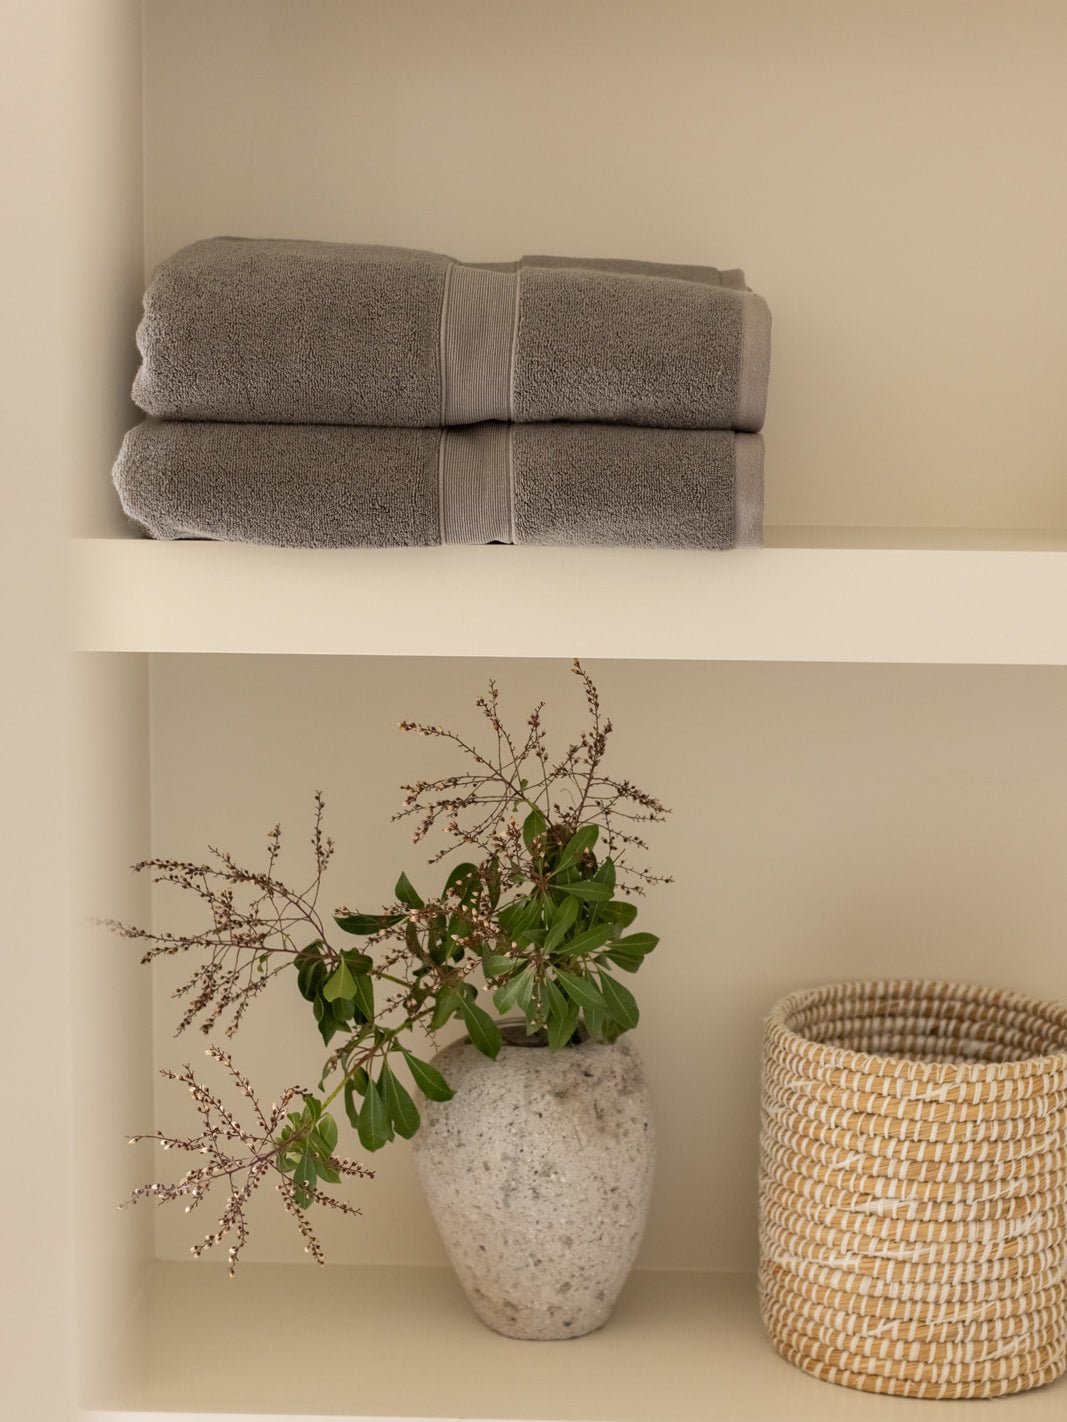 Charcoal luxe bath towels folded on shelf 